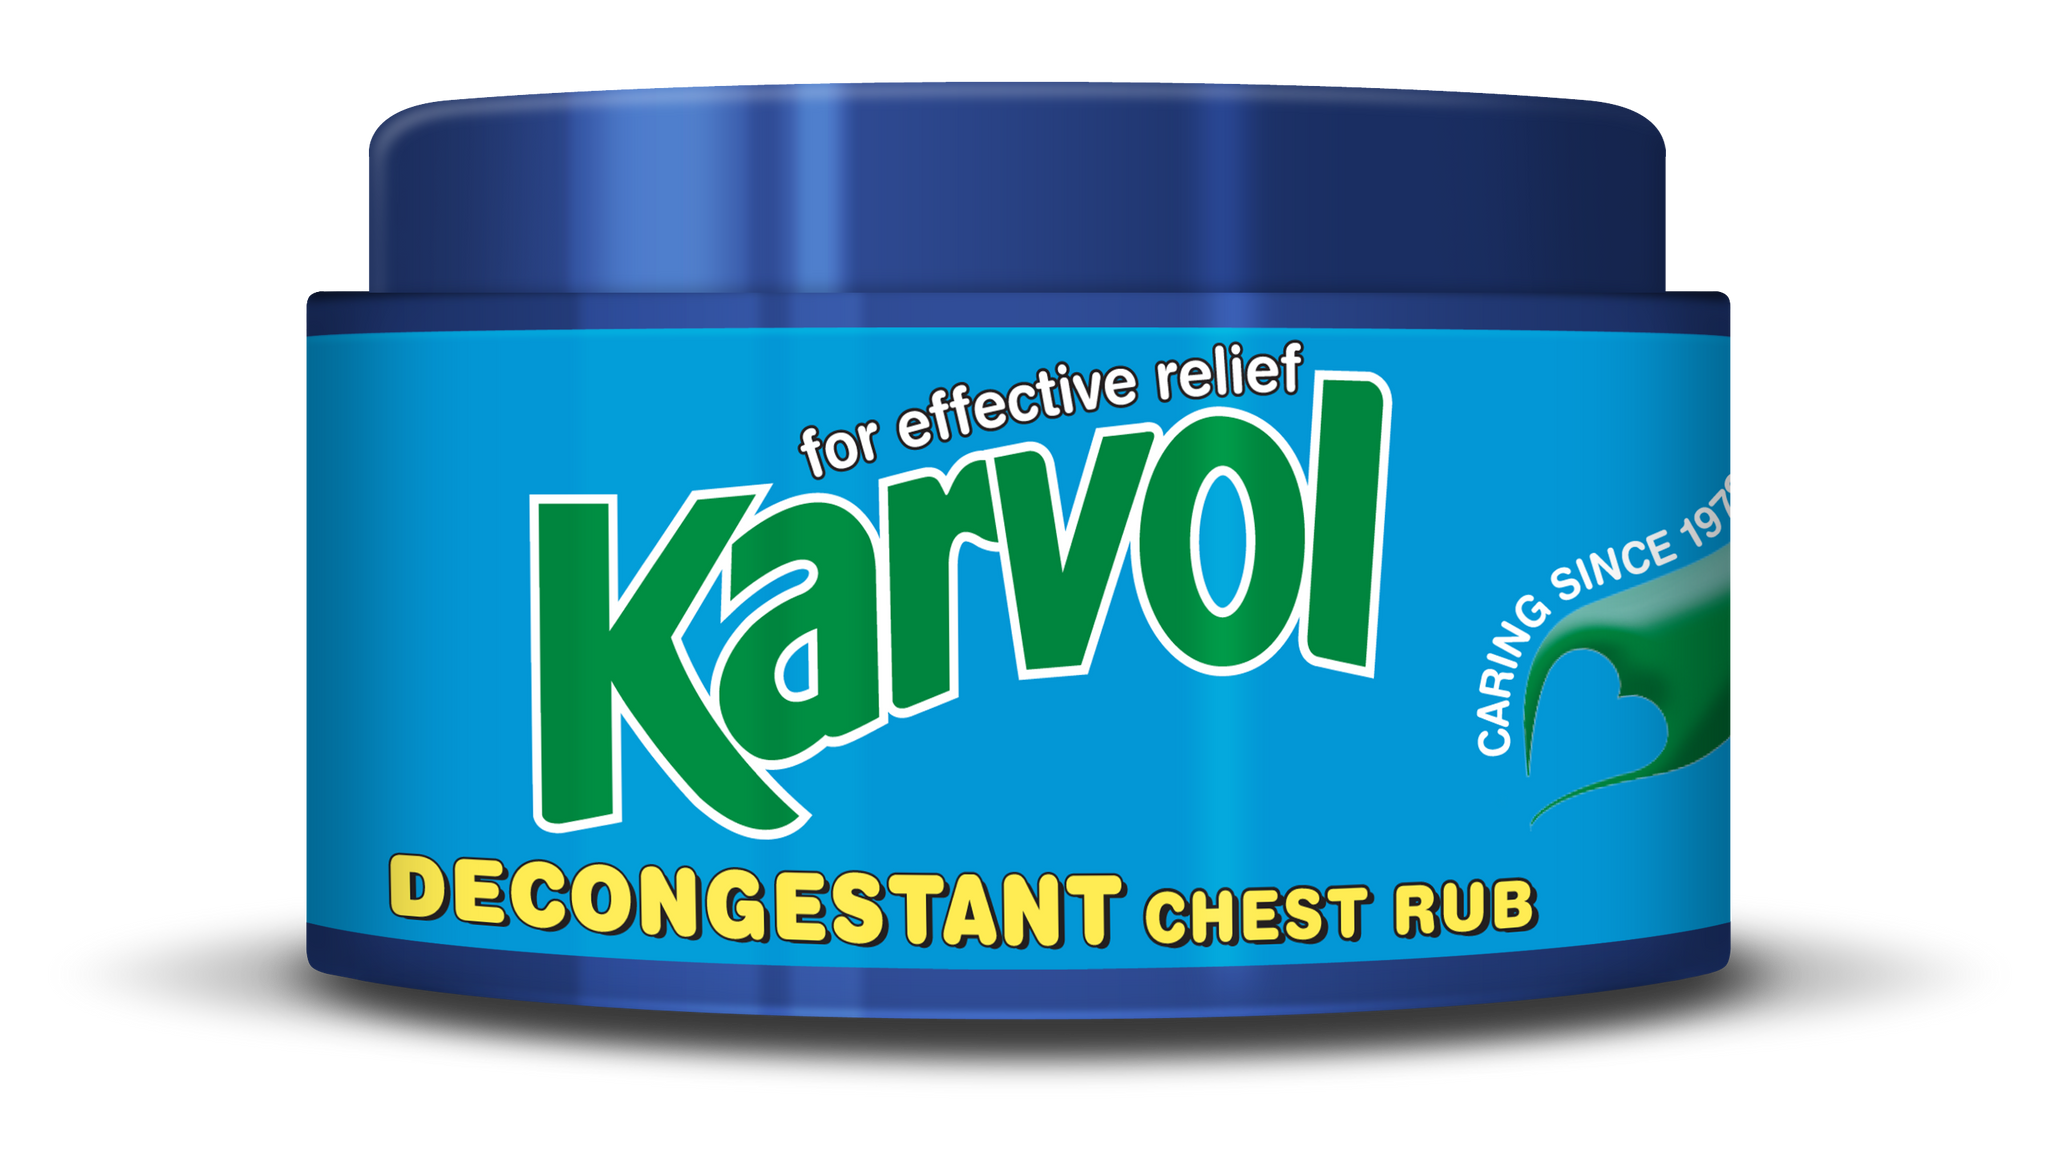 Karvol Decongestant Chest Rub - 50g